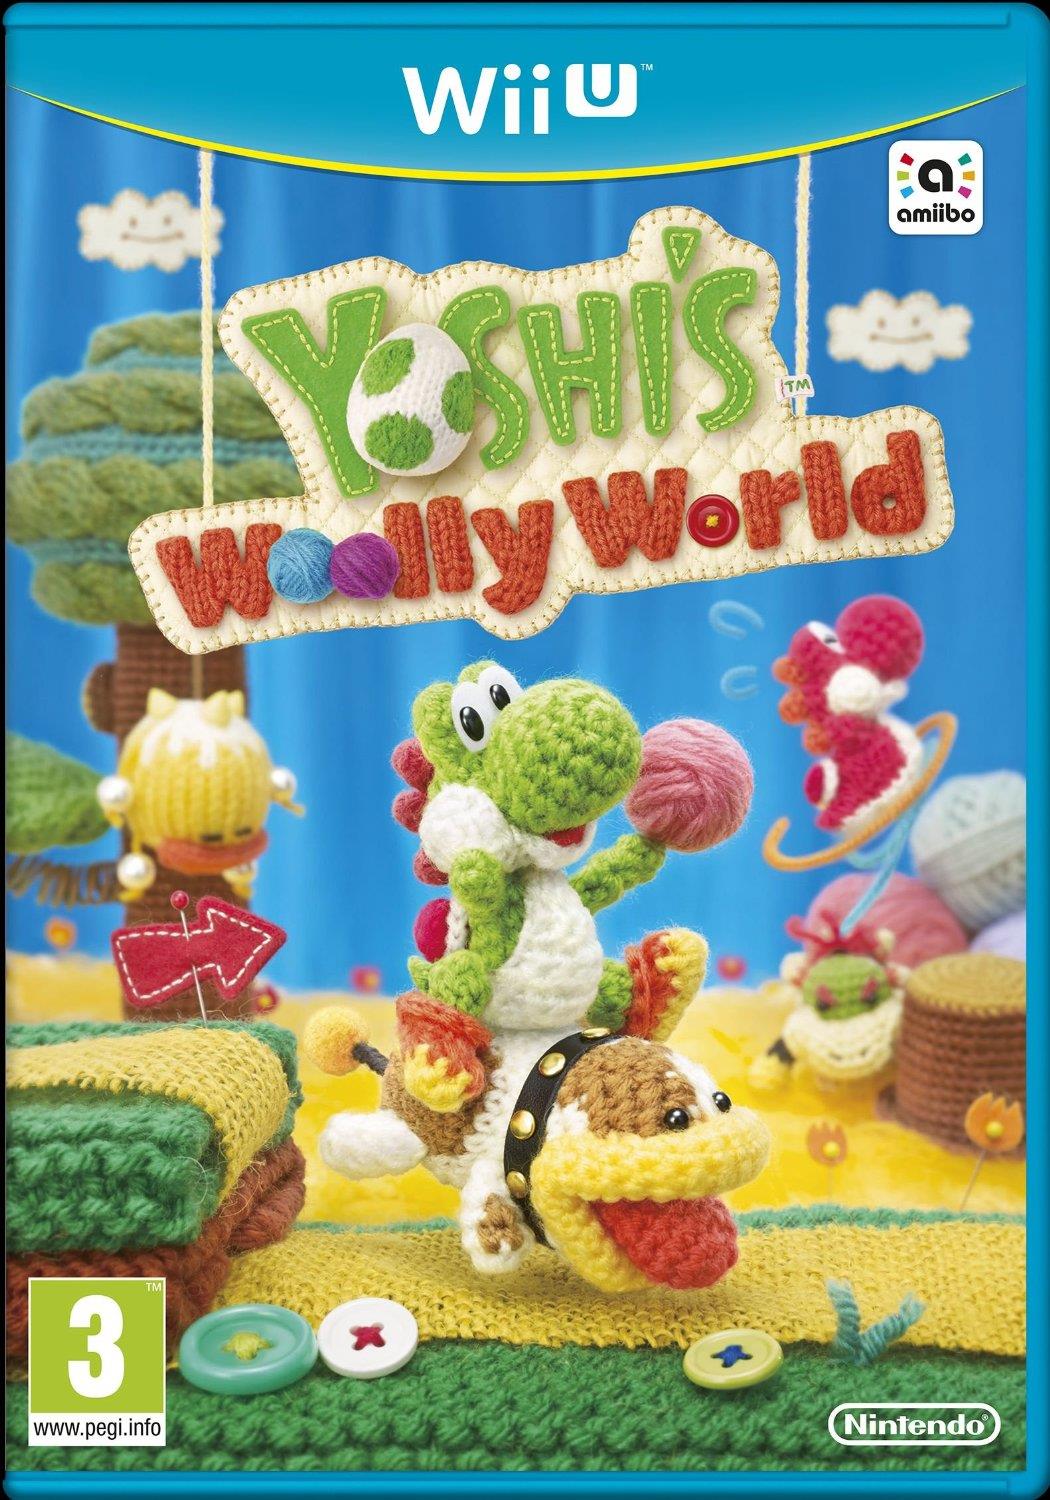 Nintendo Yoshis Woolly World